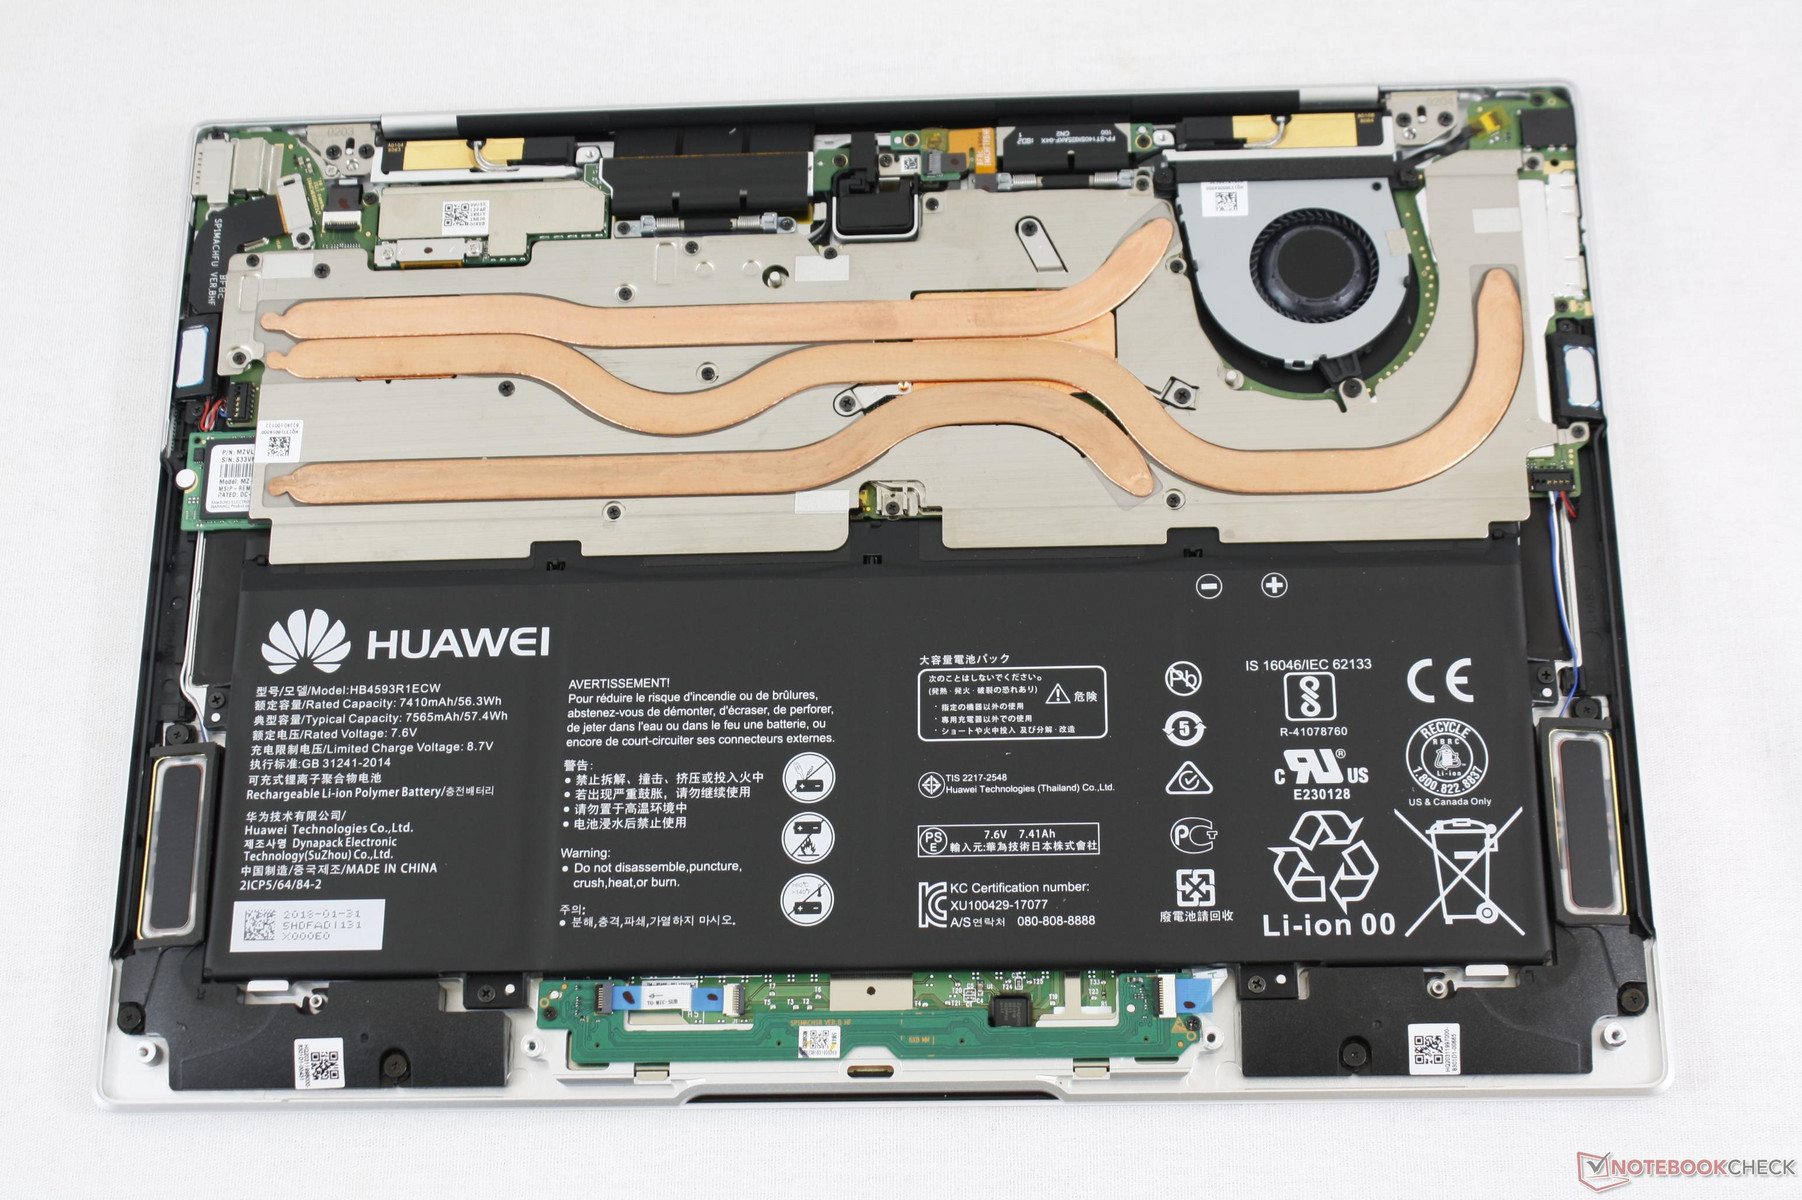 Huawei MateBook X Pro Laptop Review - NotebookCheck.net Reviews